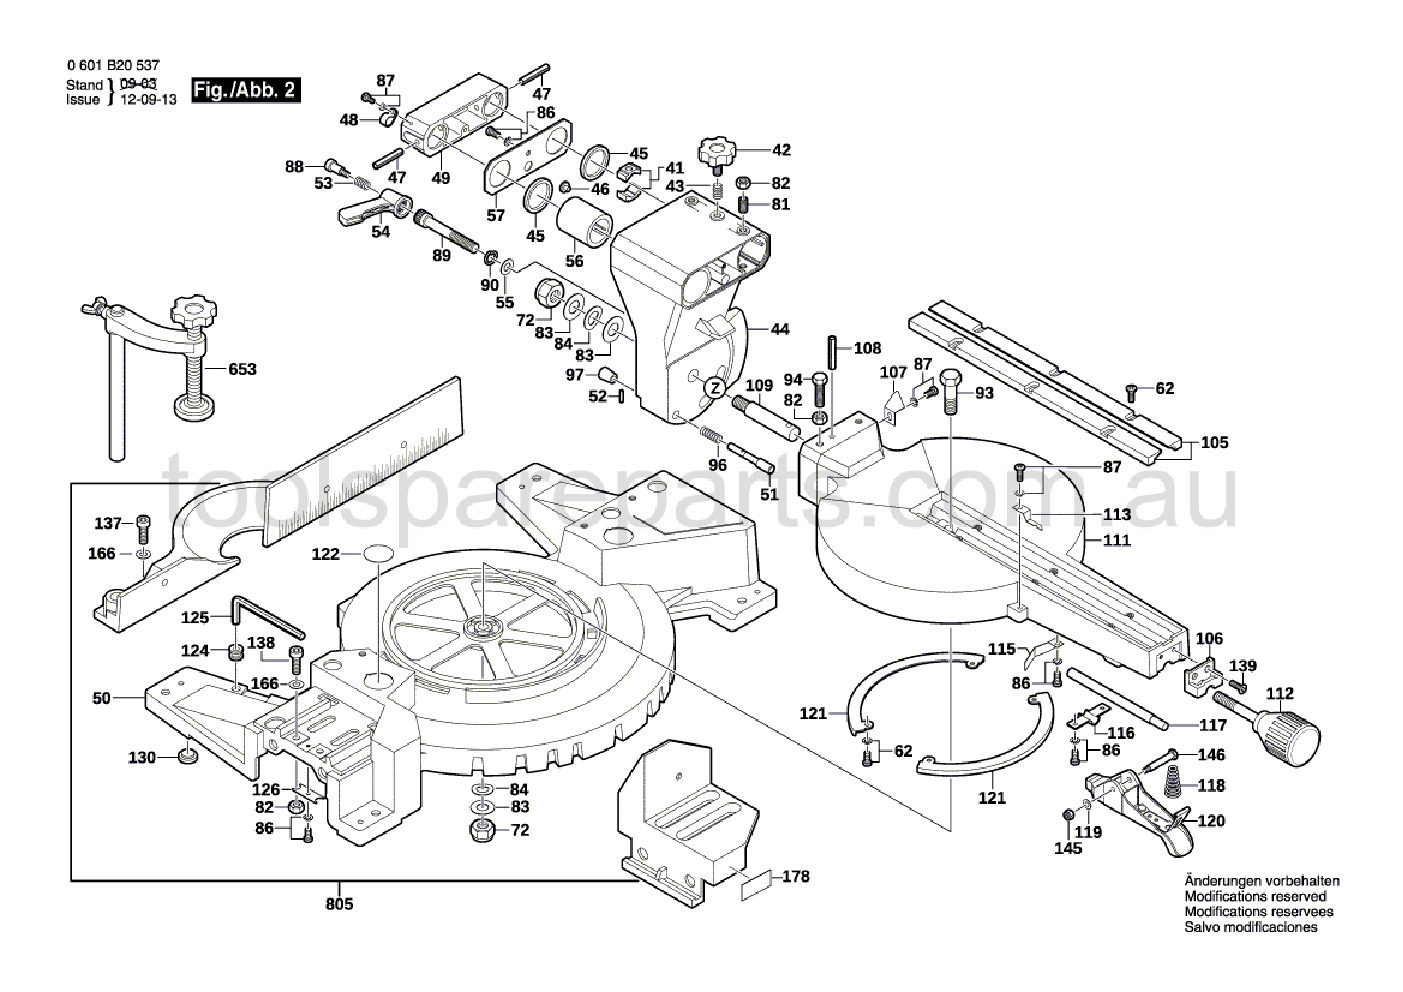 Bosch GCM 10 S 0601B20537  Diagram 2